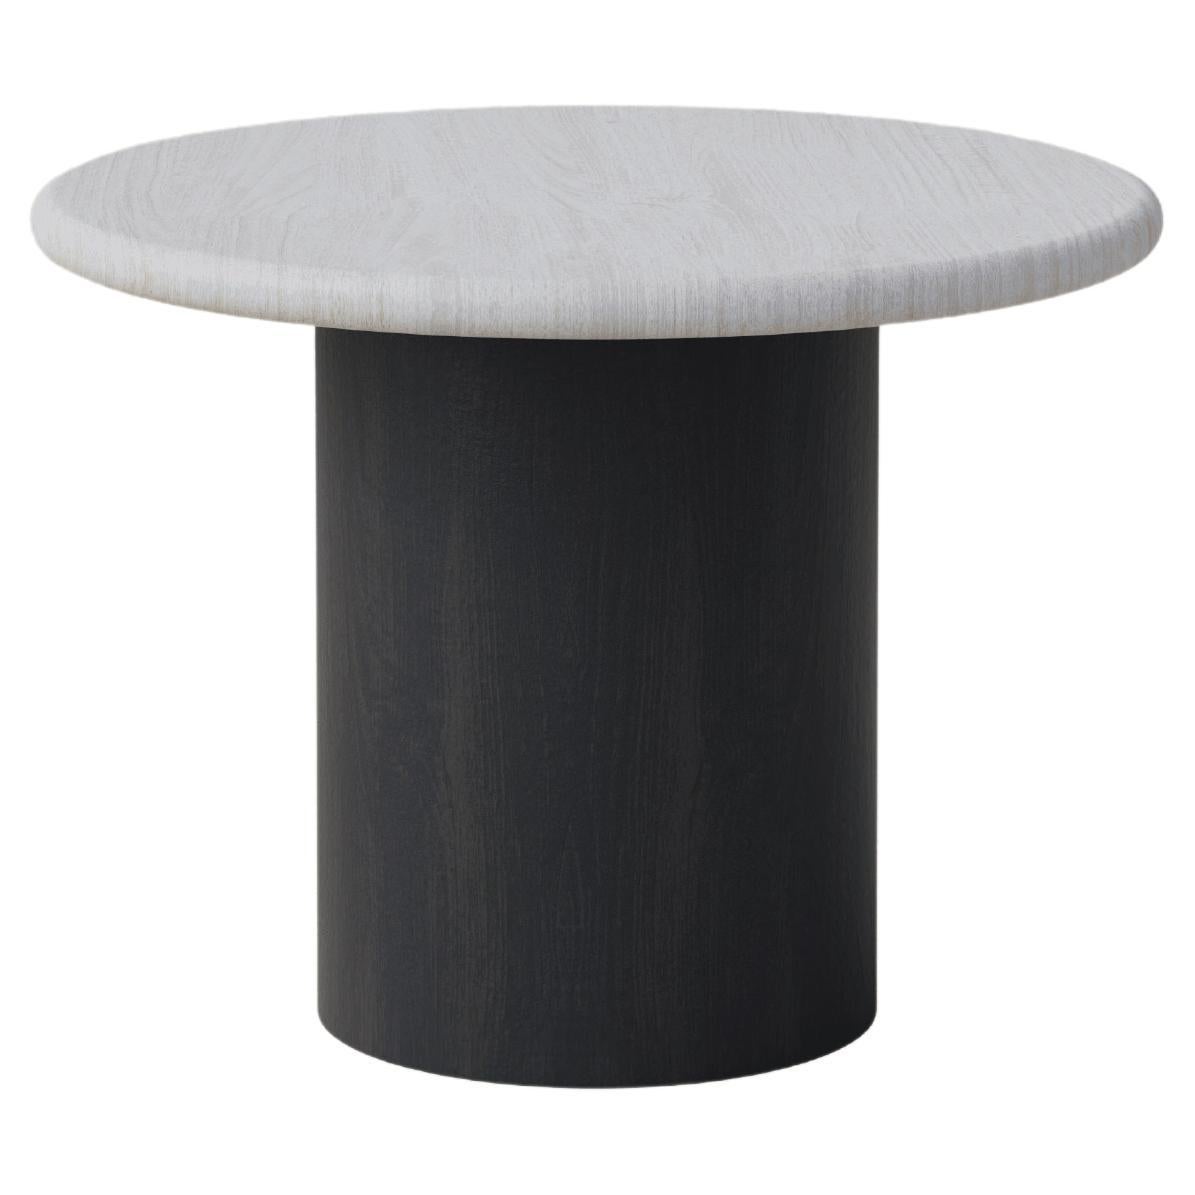 Table basse en forme de goutte d'eau, 500, chêne blanc / chêne noir